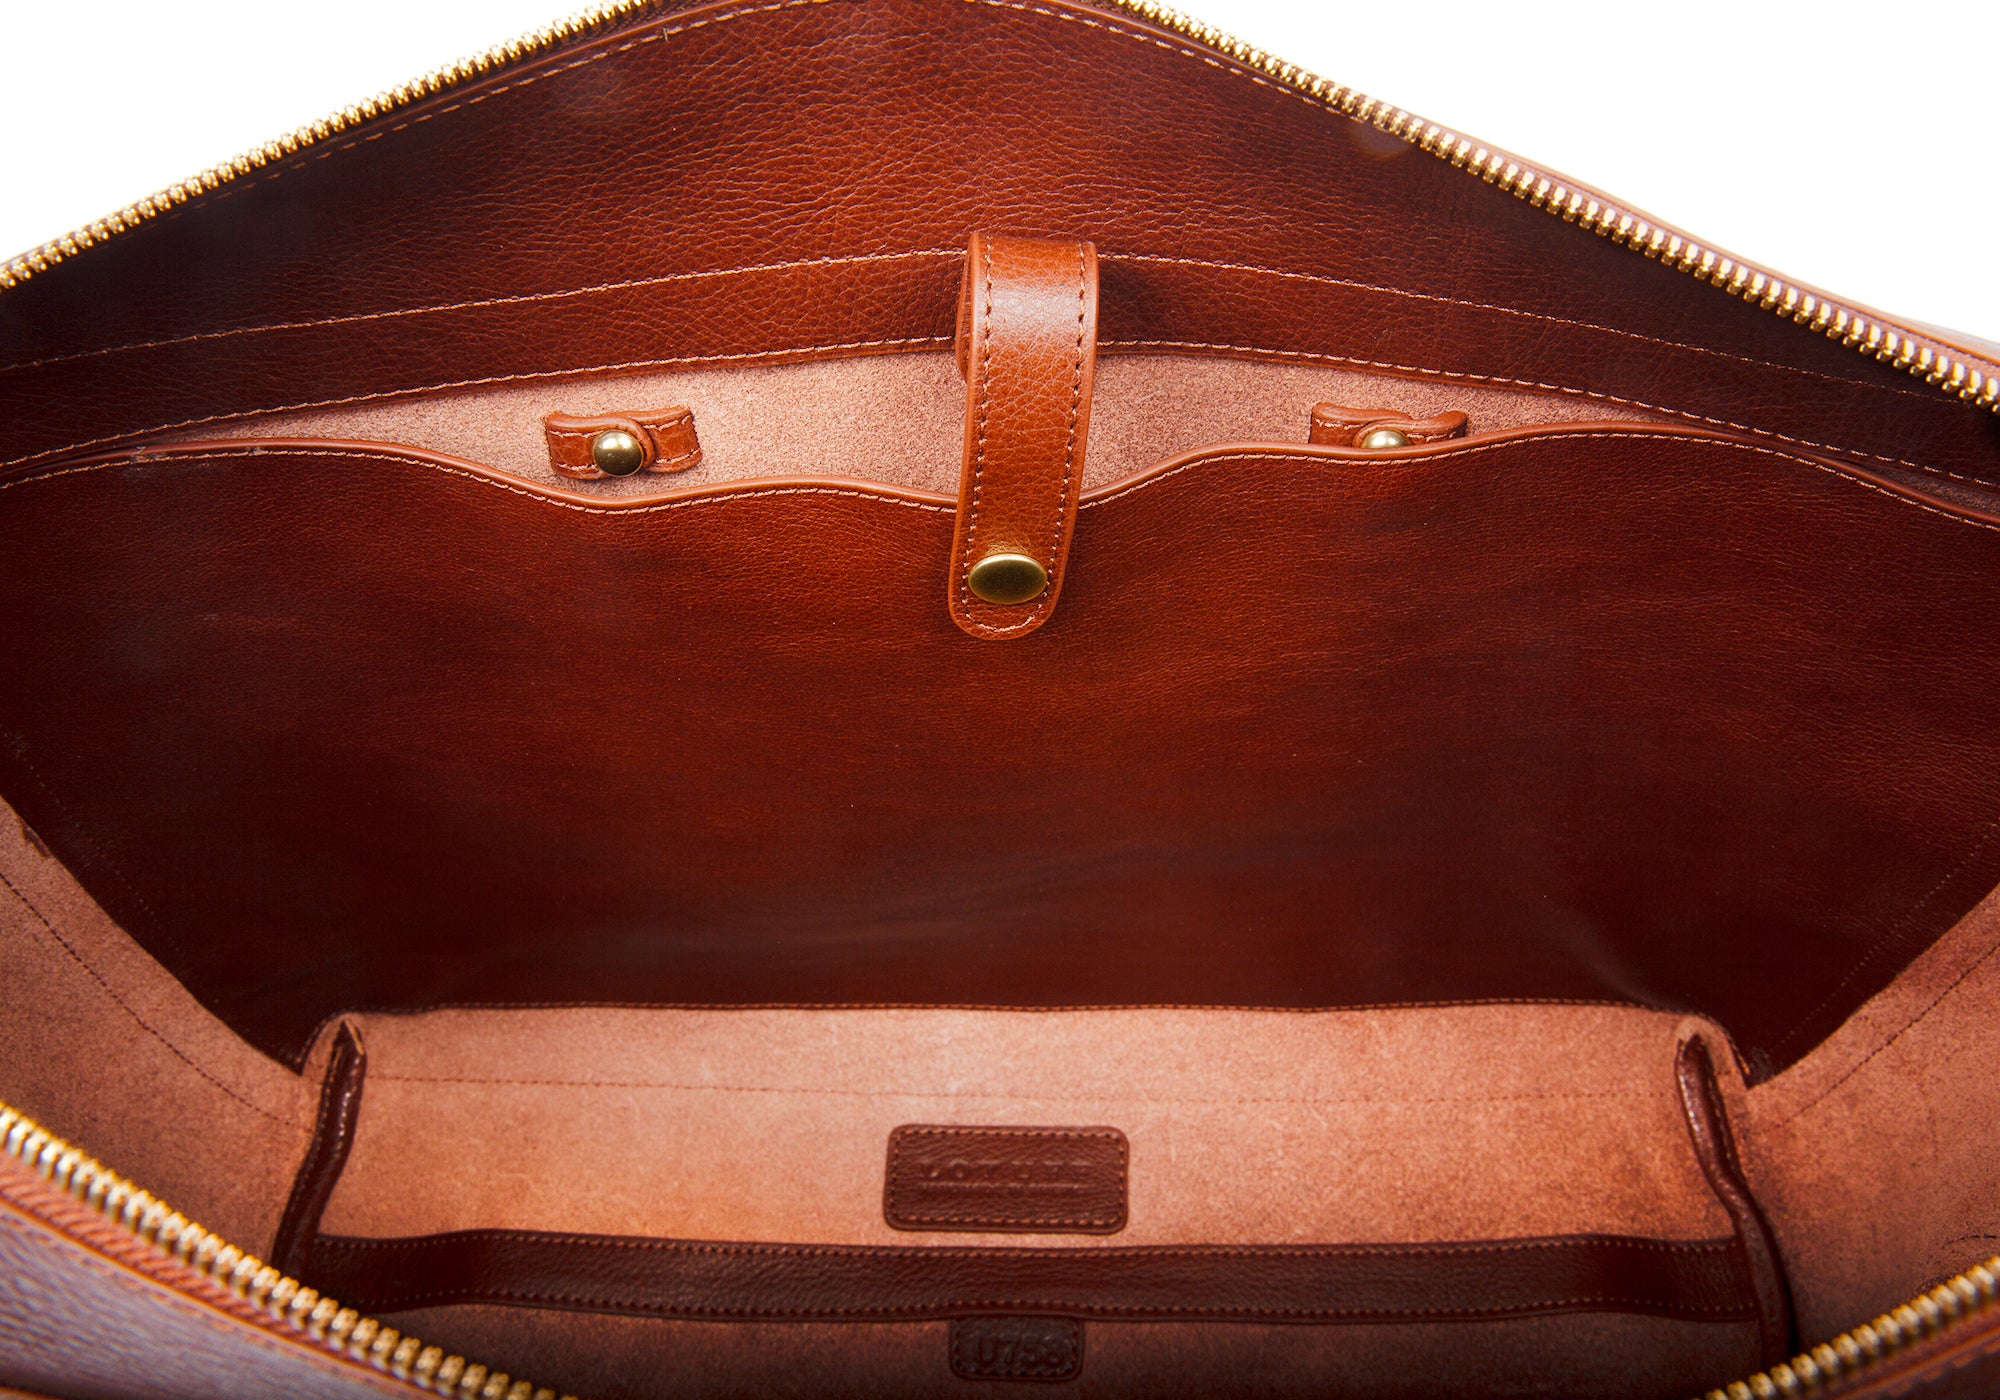 The 929 Briefcase Saddle Tan